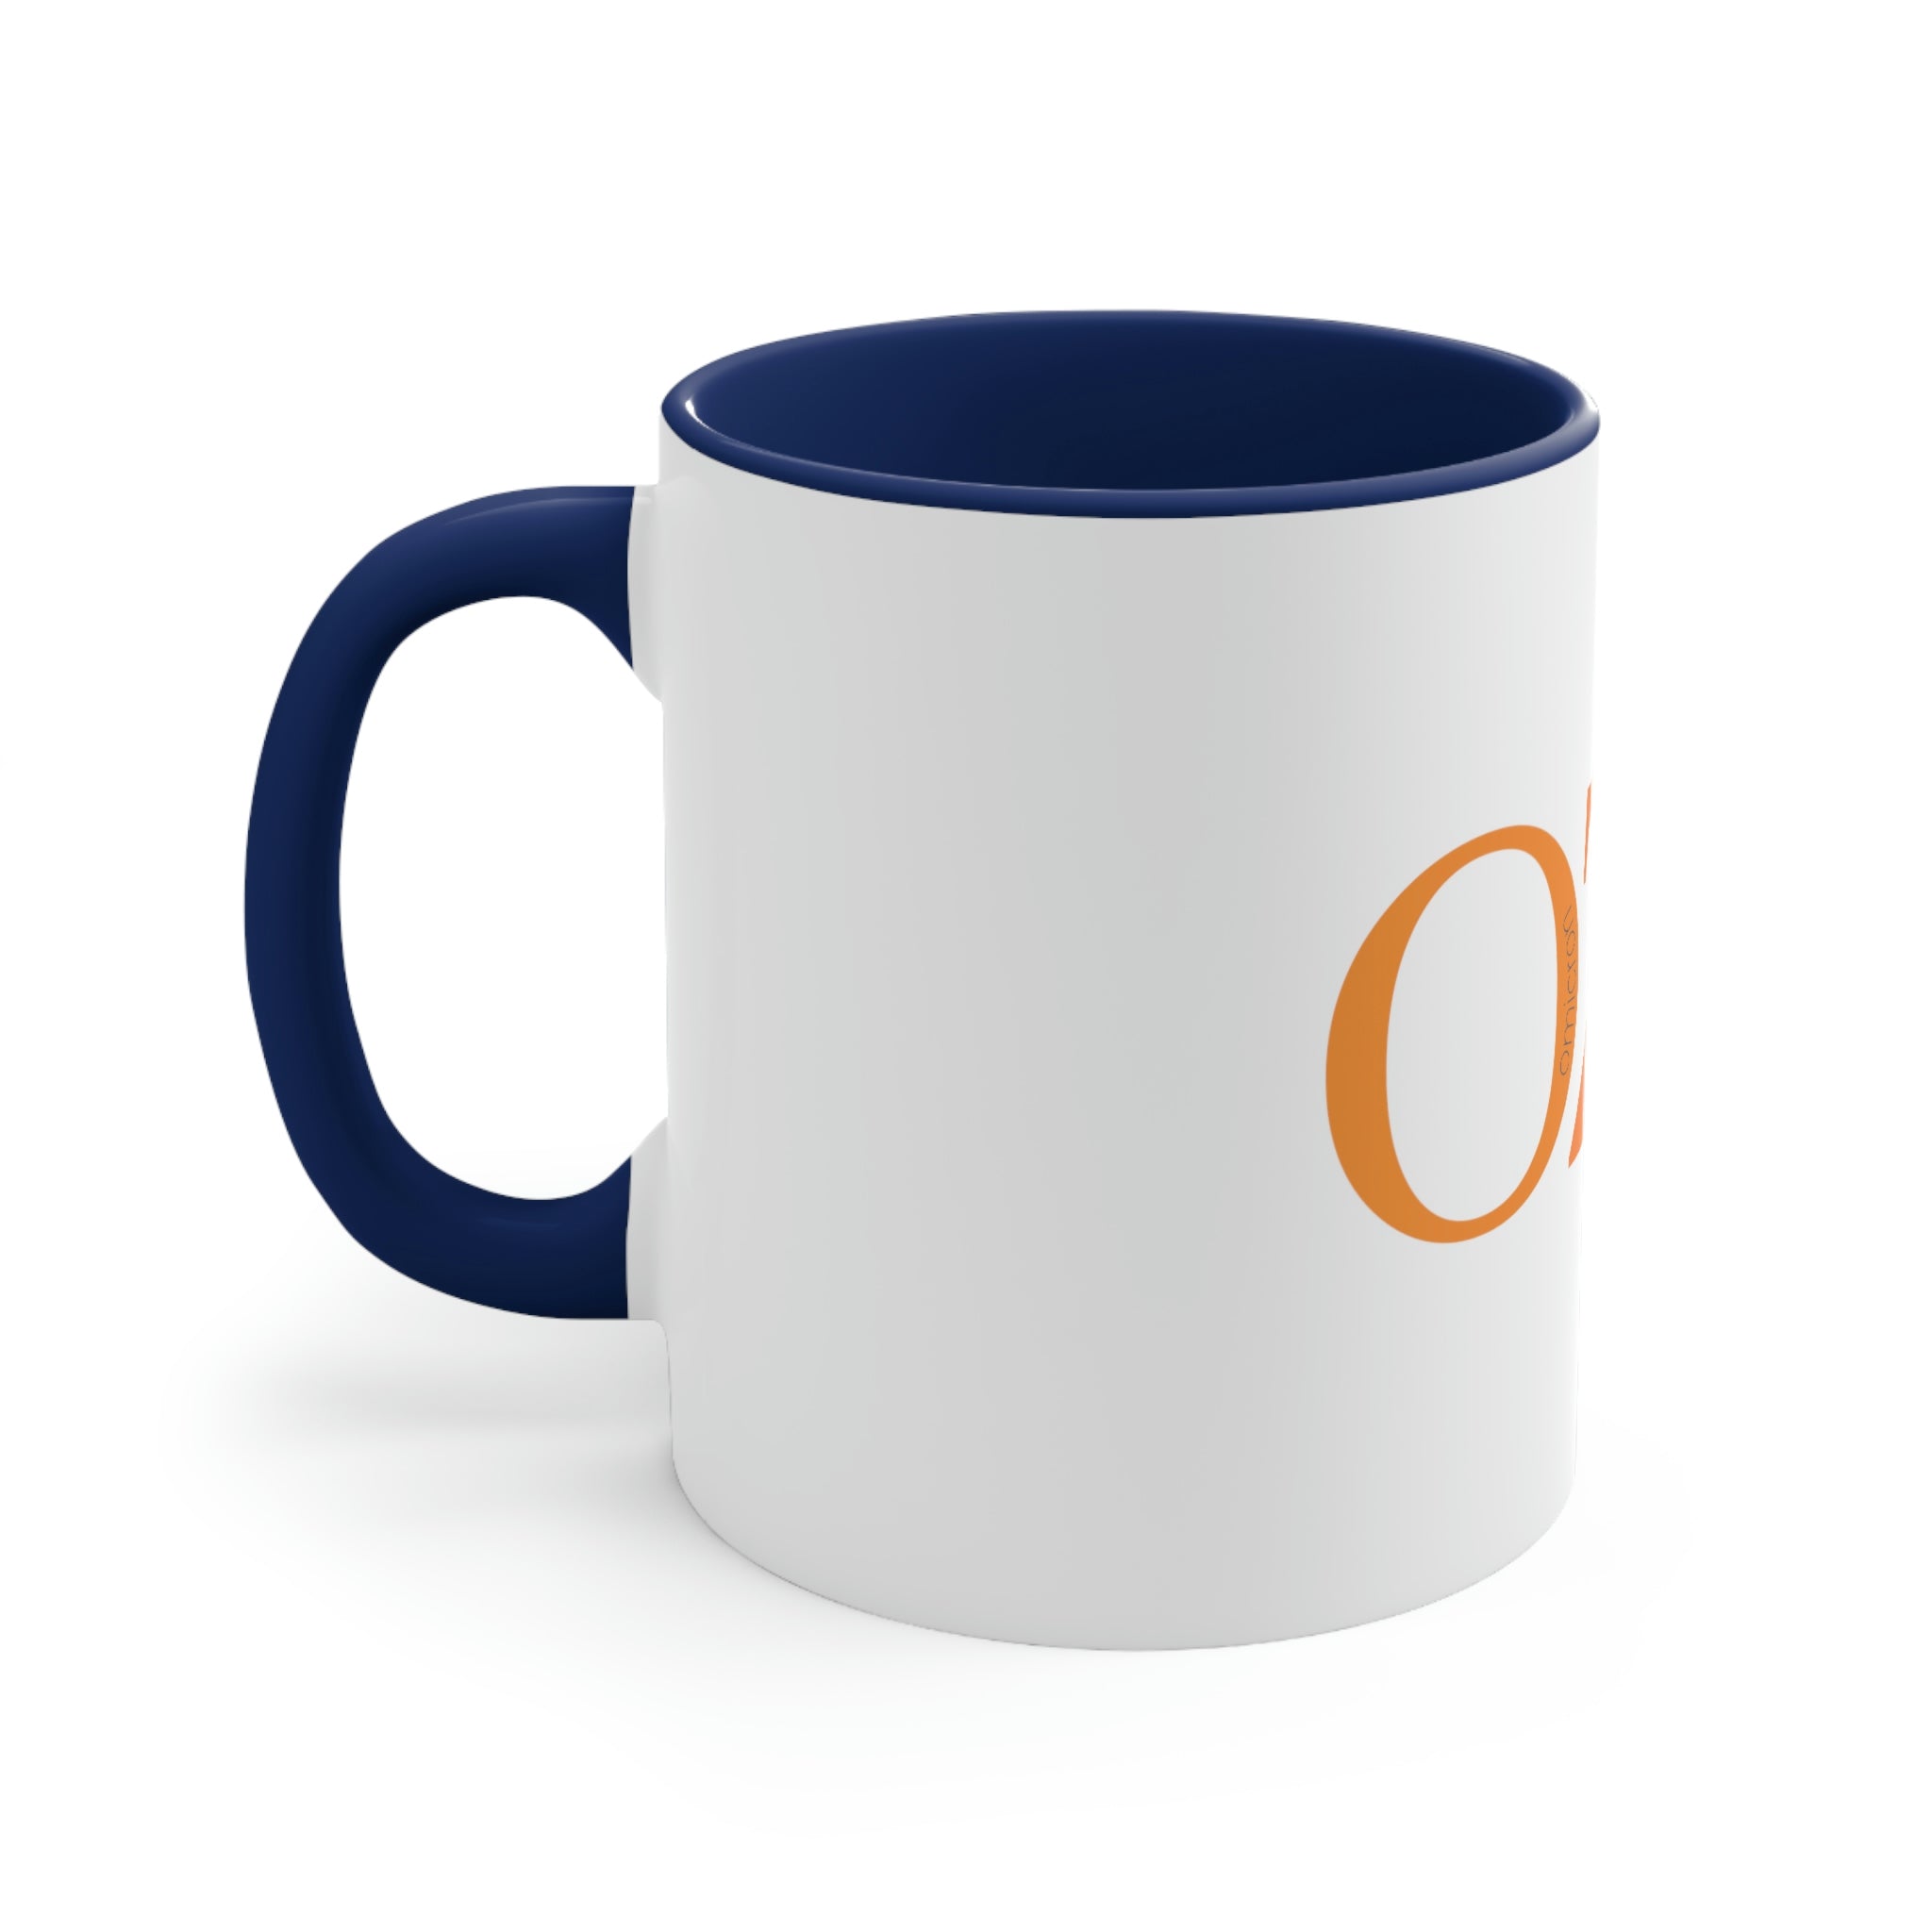 Omicron Zeta Eta Accent Coffee Mug, 11oz (orange letters)